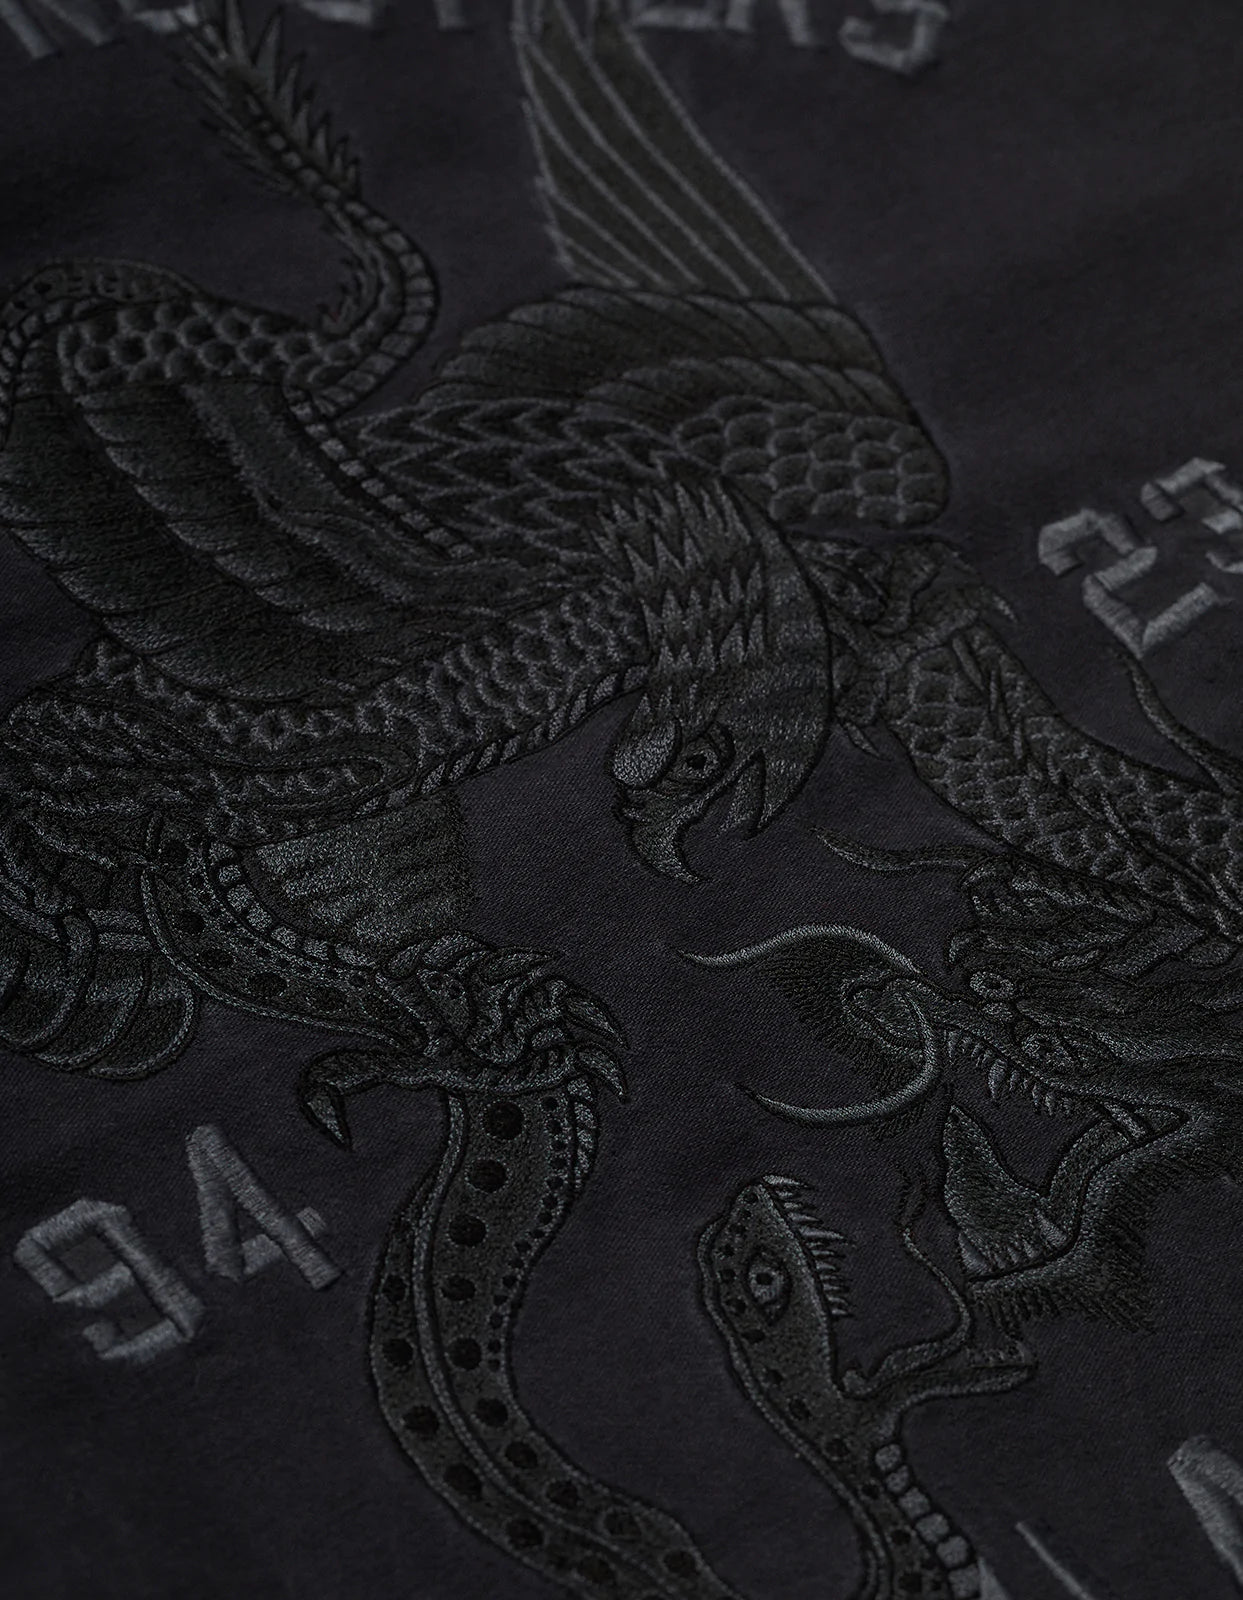 Maharishi U.A.P. Embroidered Tour Jacket 'Black'